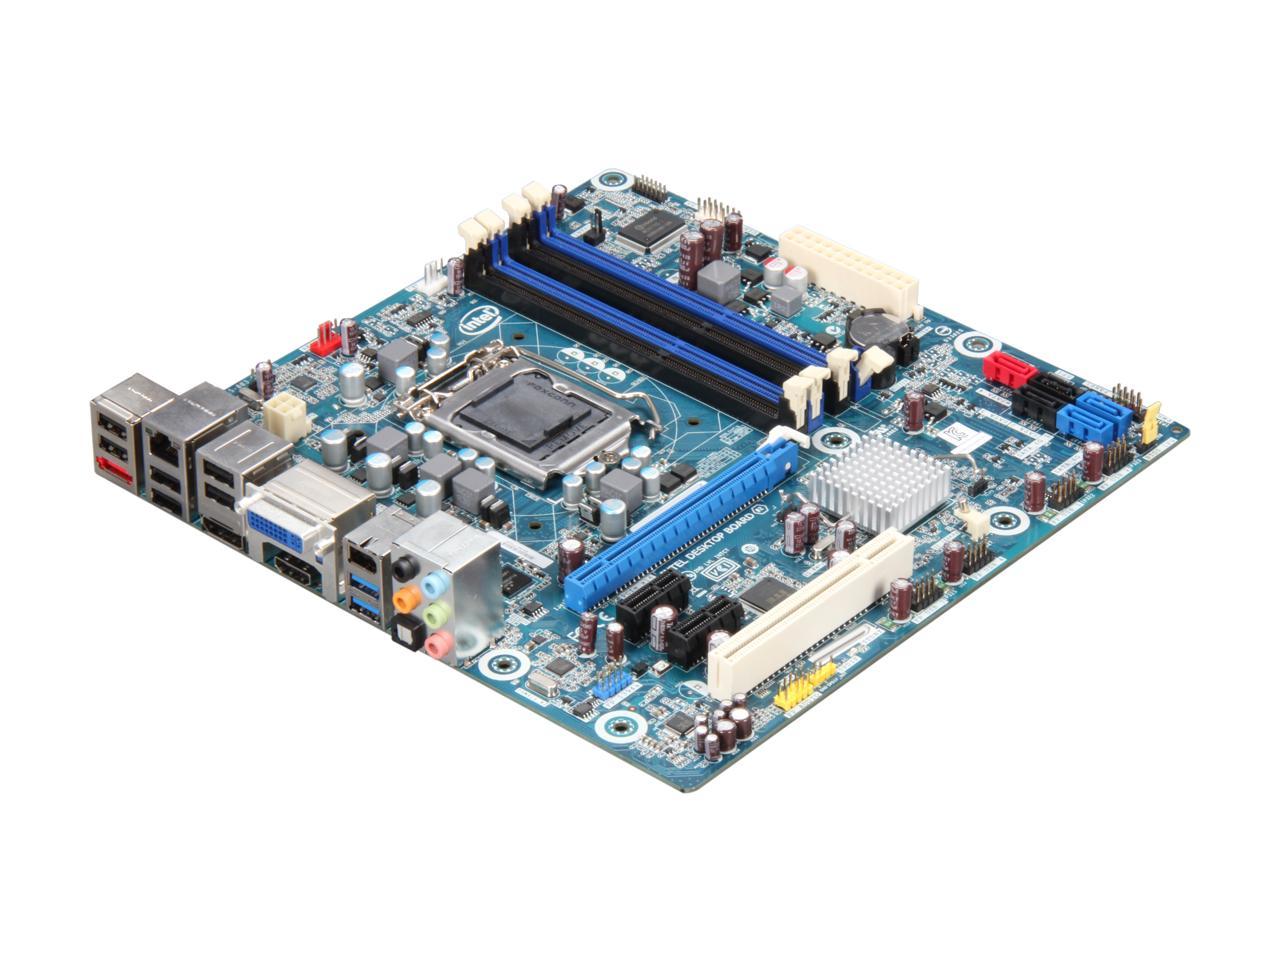 Intel BOXDH67GDB3 LGA 1155 Micro ATX Intel Motherboard - Newegg.com